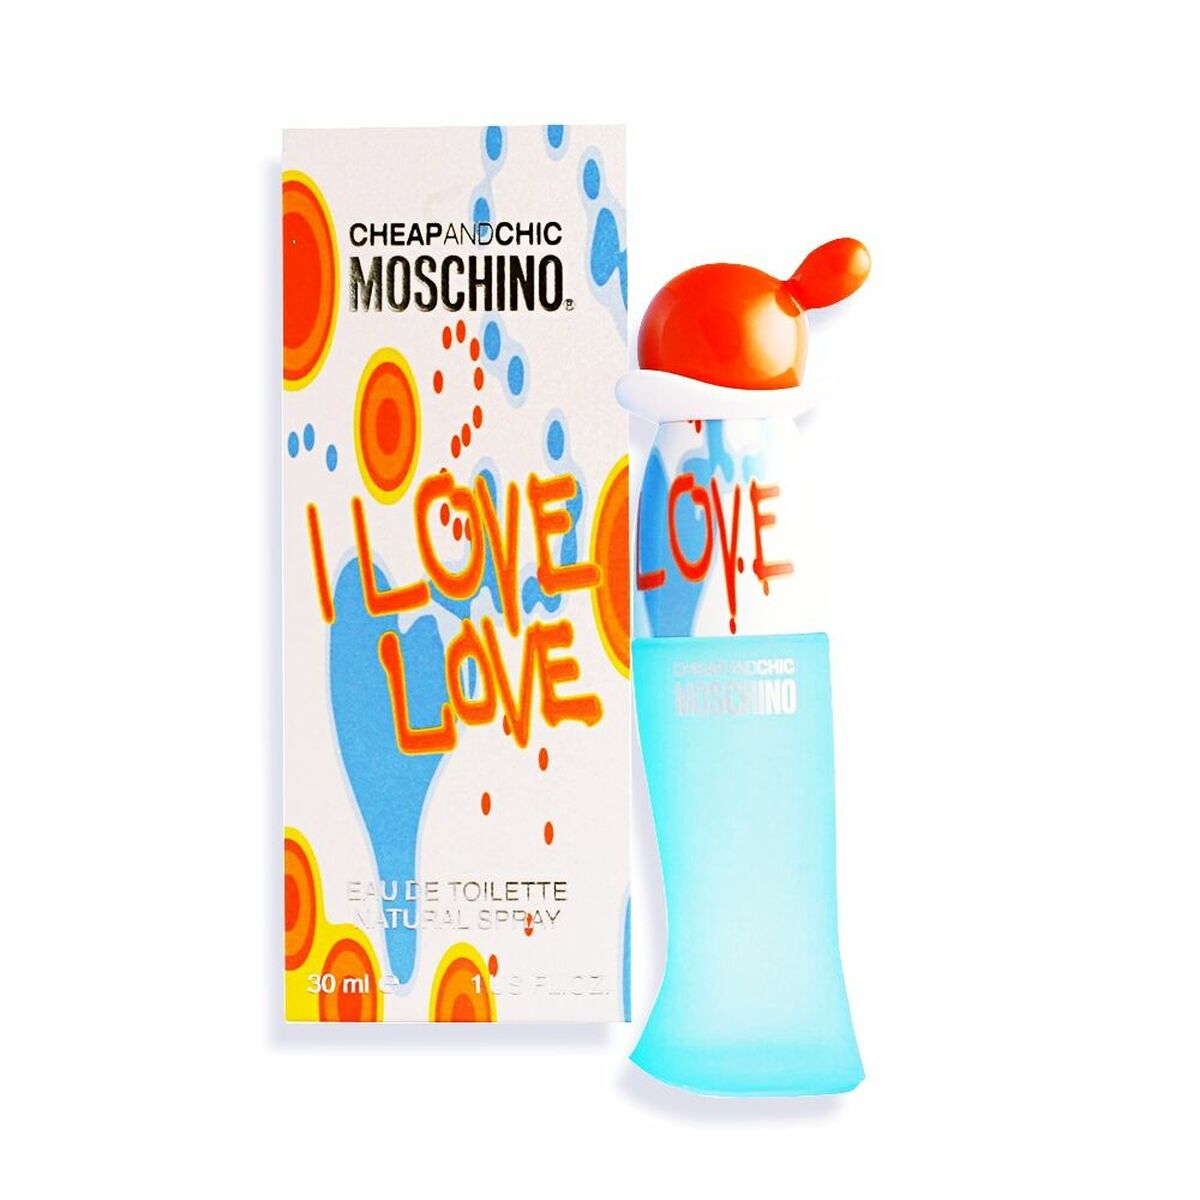 Perfume de femmes Moschino pas cher & chic I Love Love Edt 30 ml